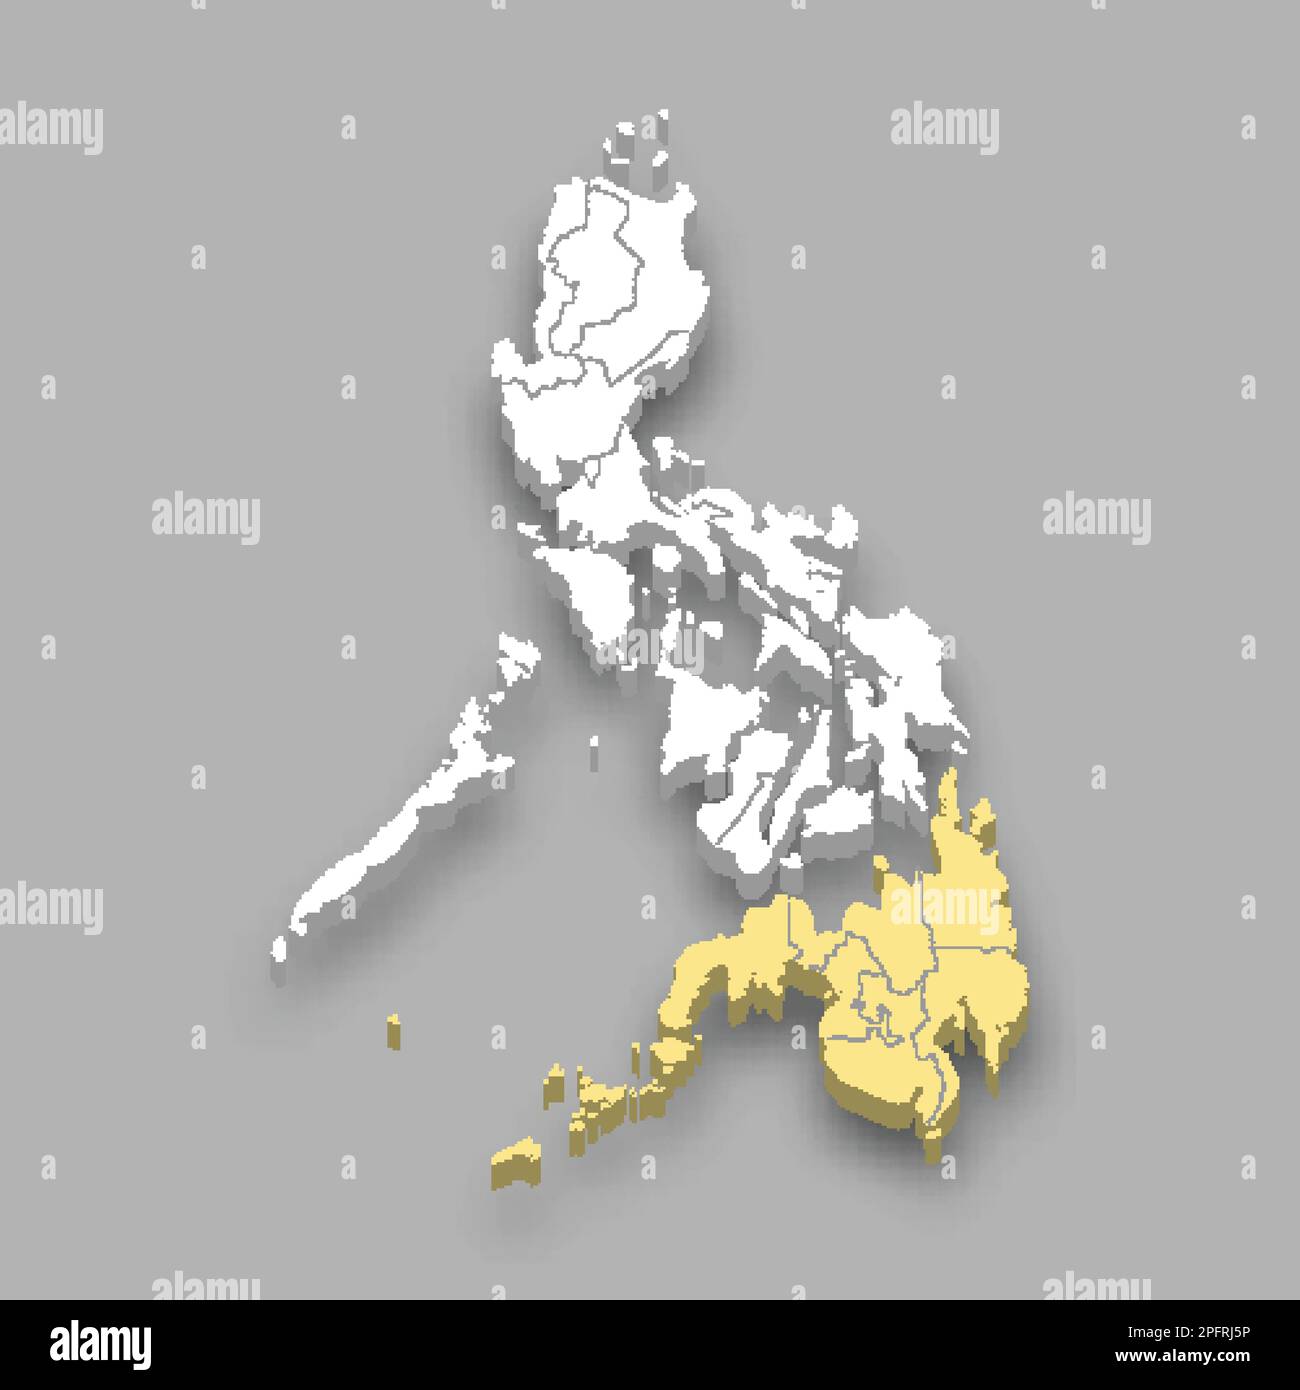 Mindanao region location within Philippines 3d isometric map Stock ...